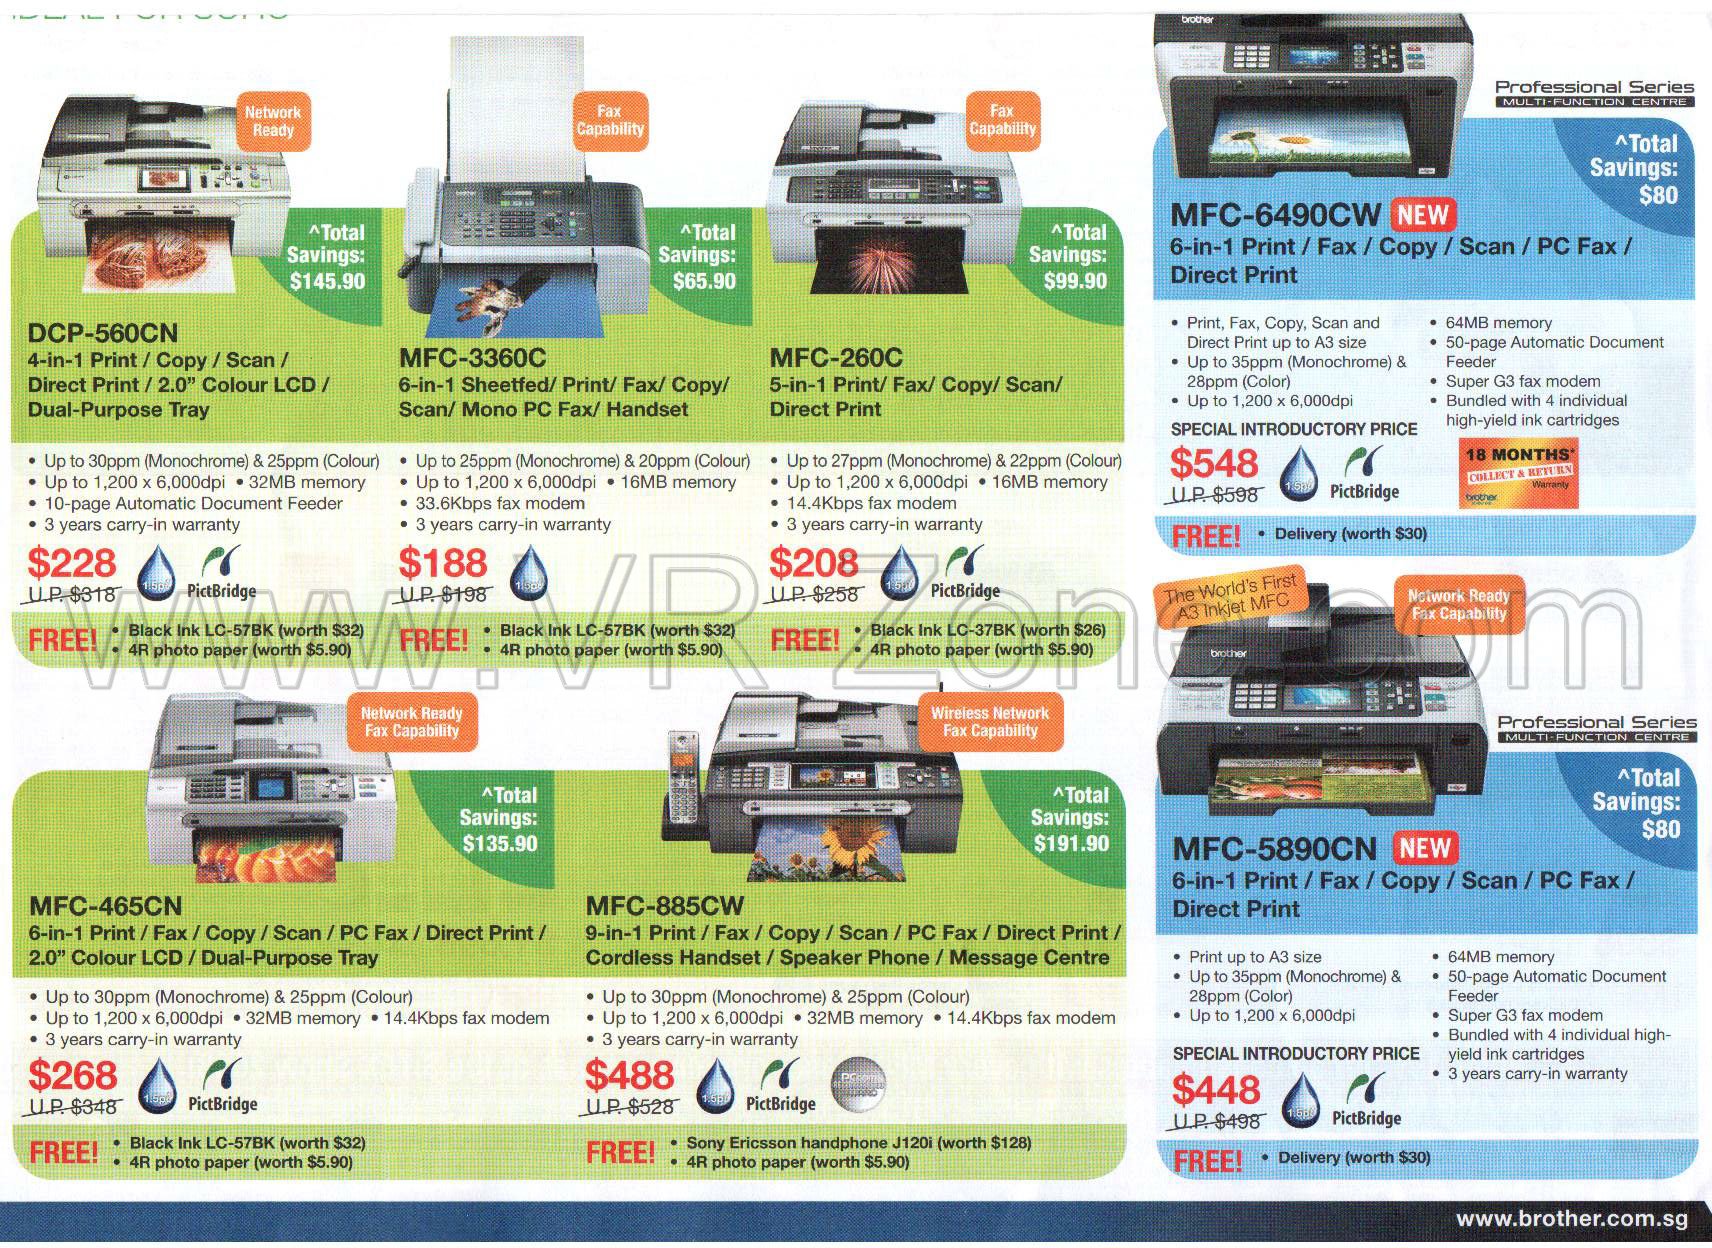 Sitex 2008 price list image brochure of Brother Printers 2